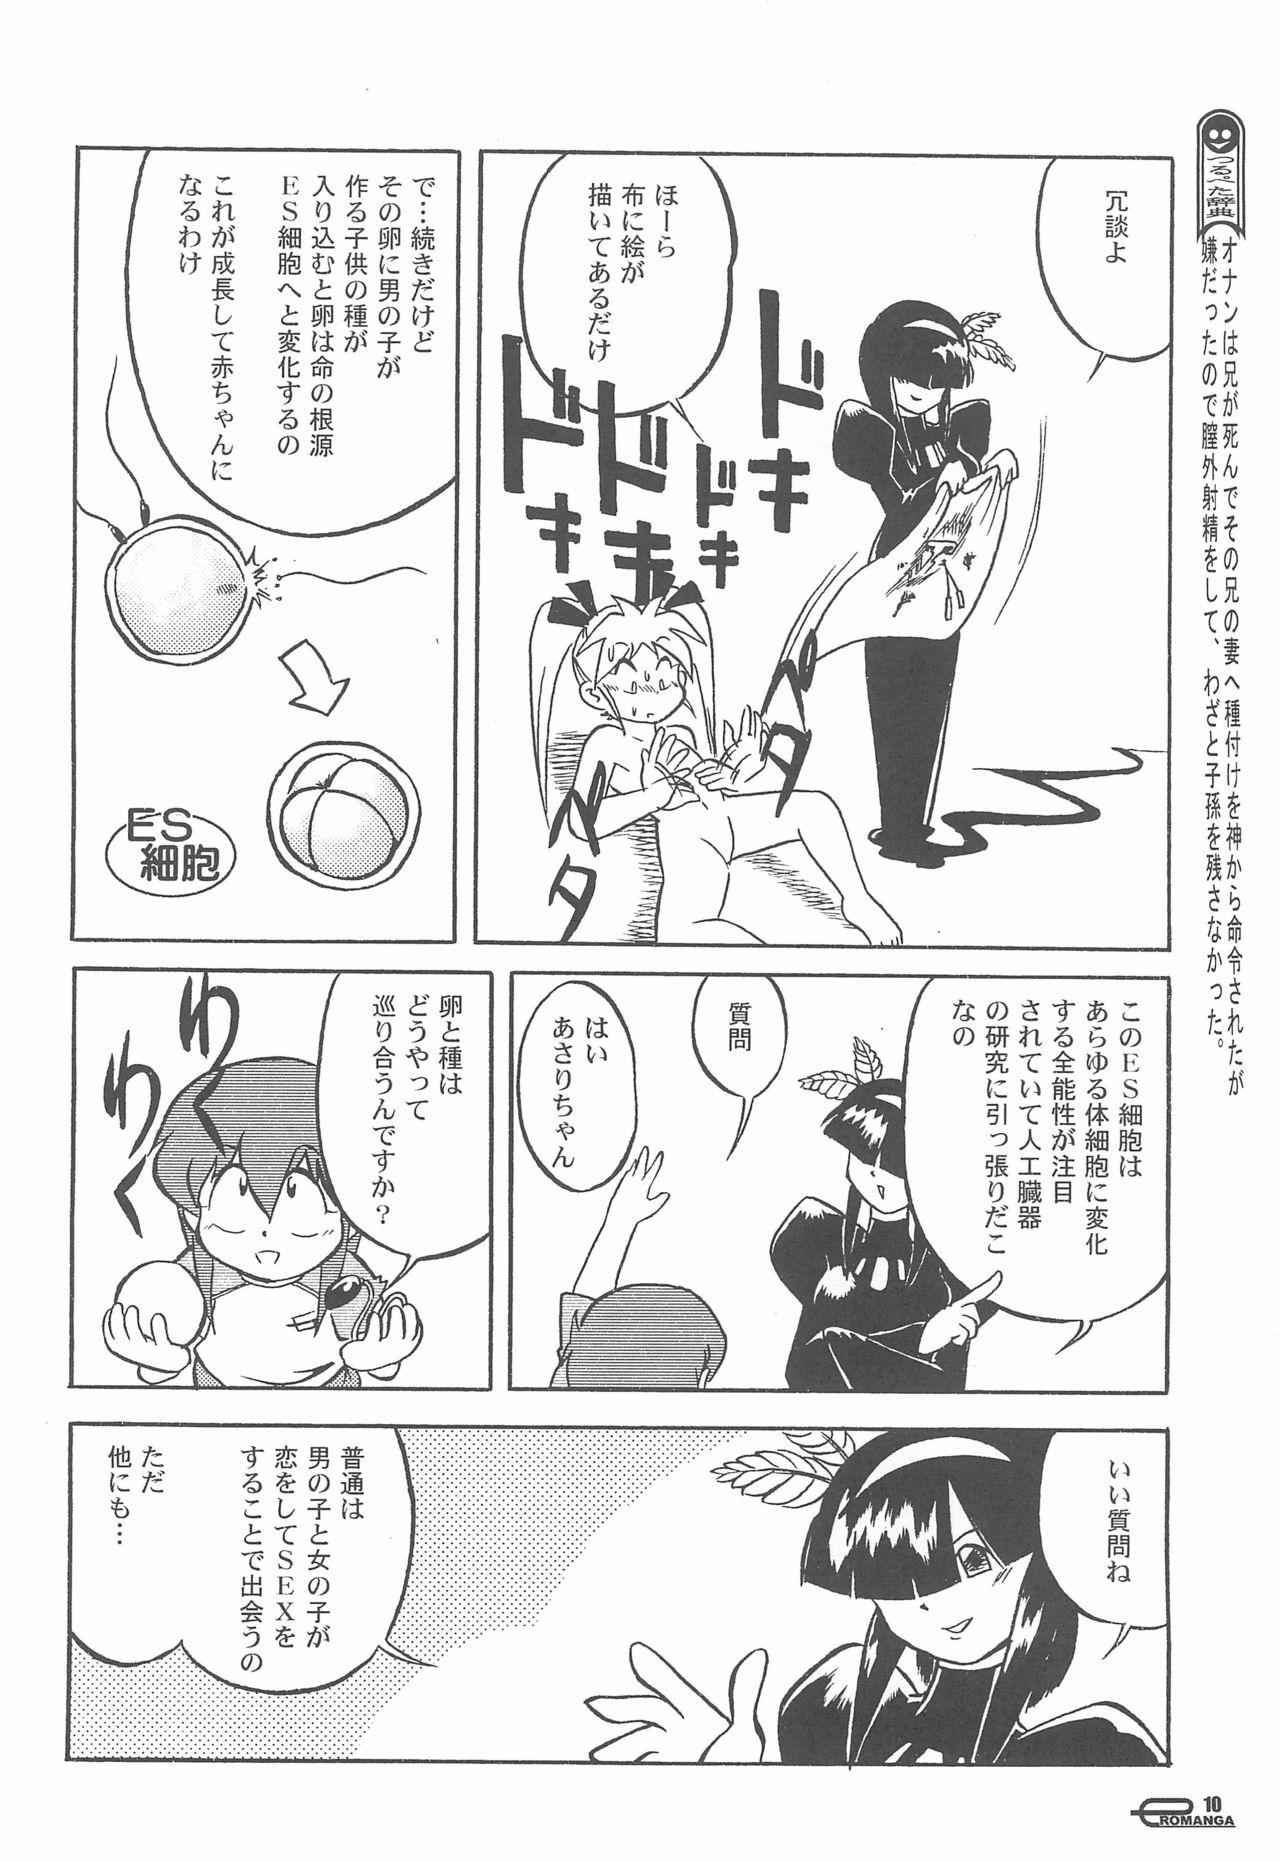 Kink Manga Science Onna no ko no Himitsu - Manga science Horny - Page 12